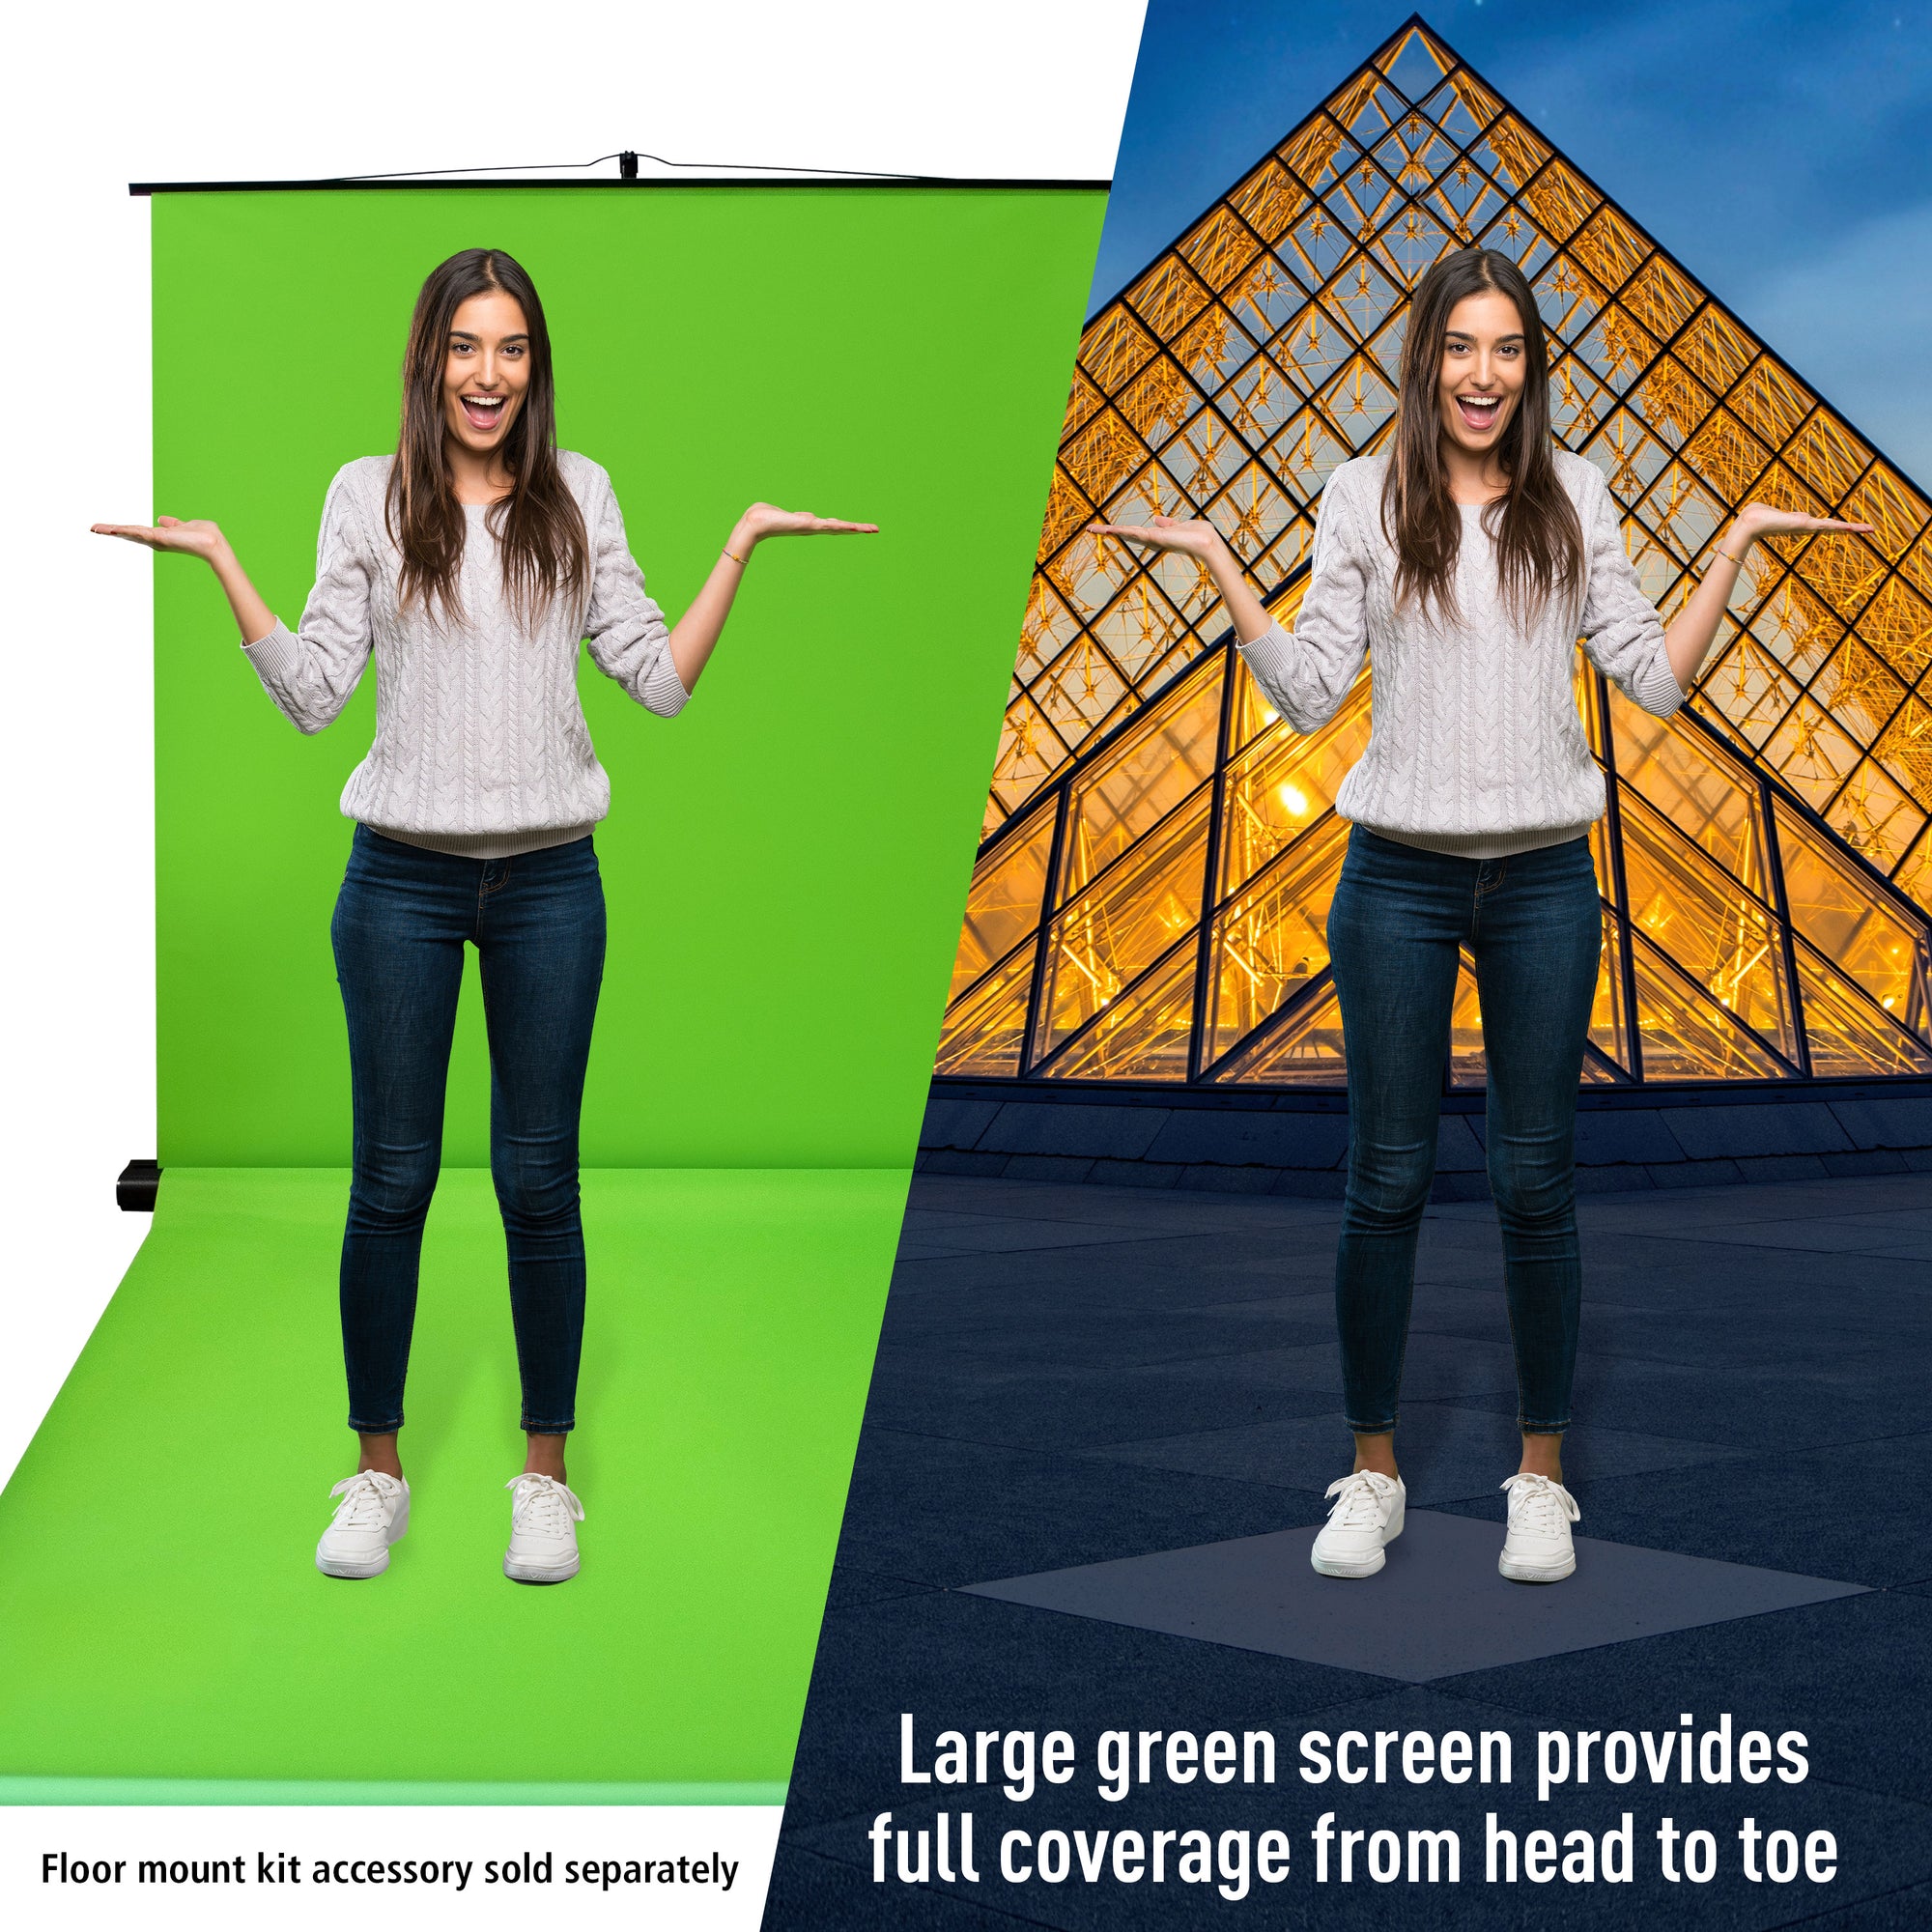 Bigscreen' Expands Platform for Creators with New Green Screen Environment